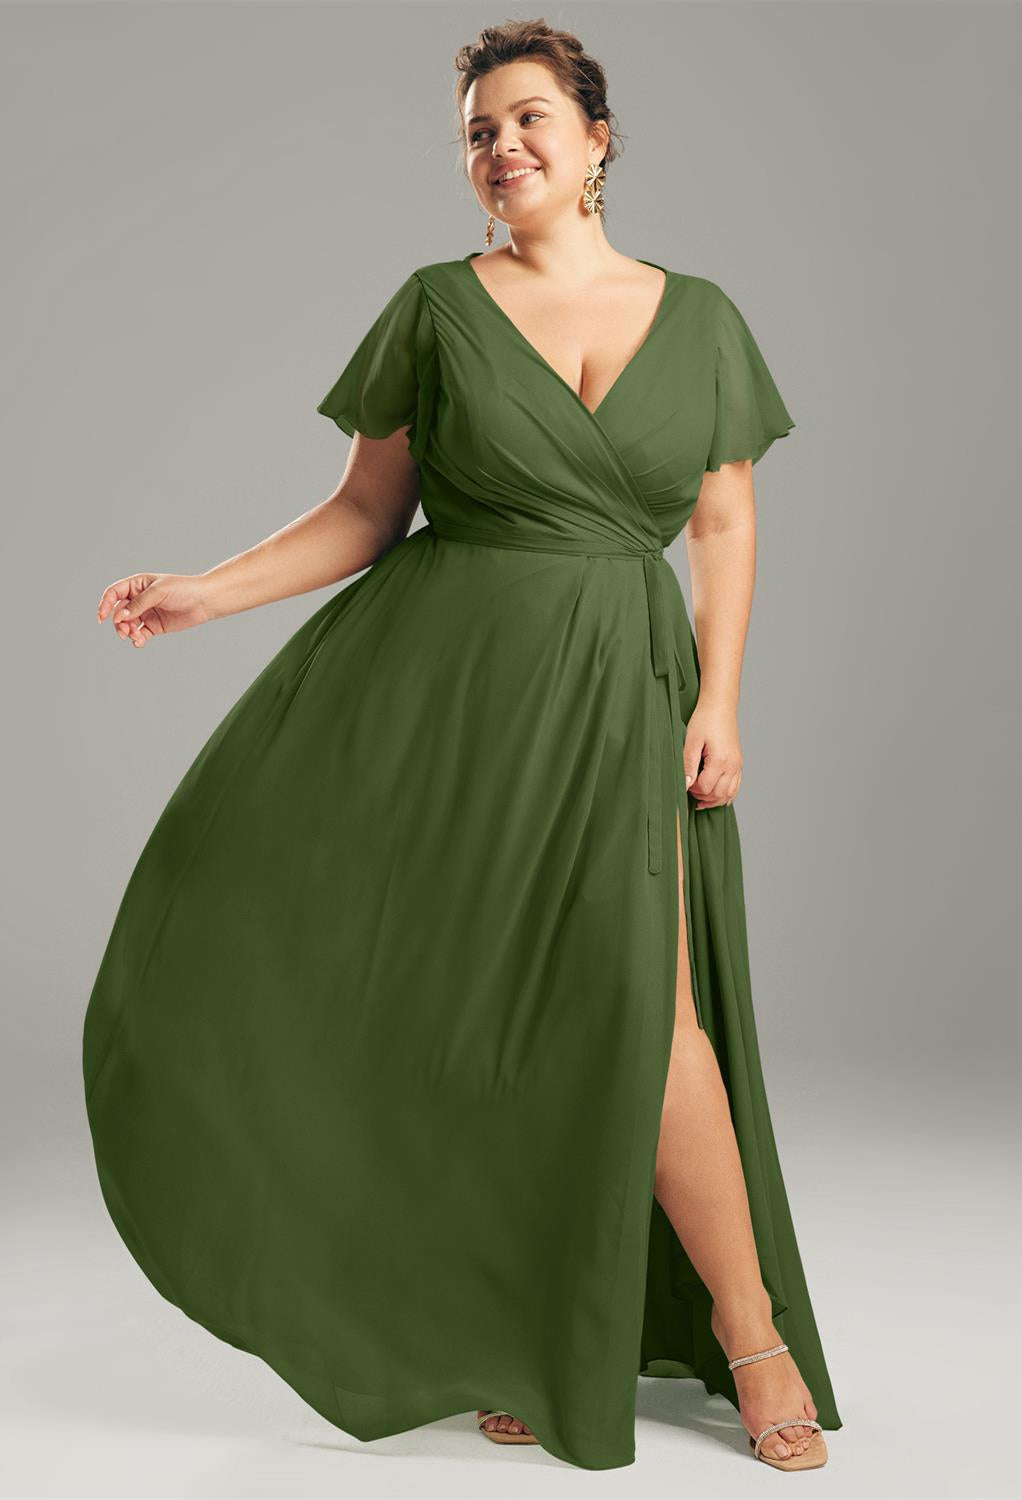 Ellison - Chiffon Bridesmaid Dress